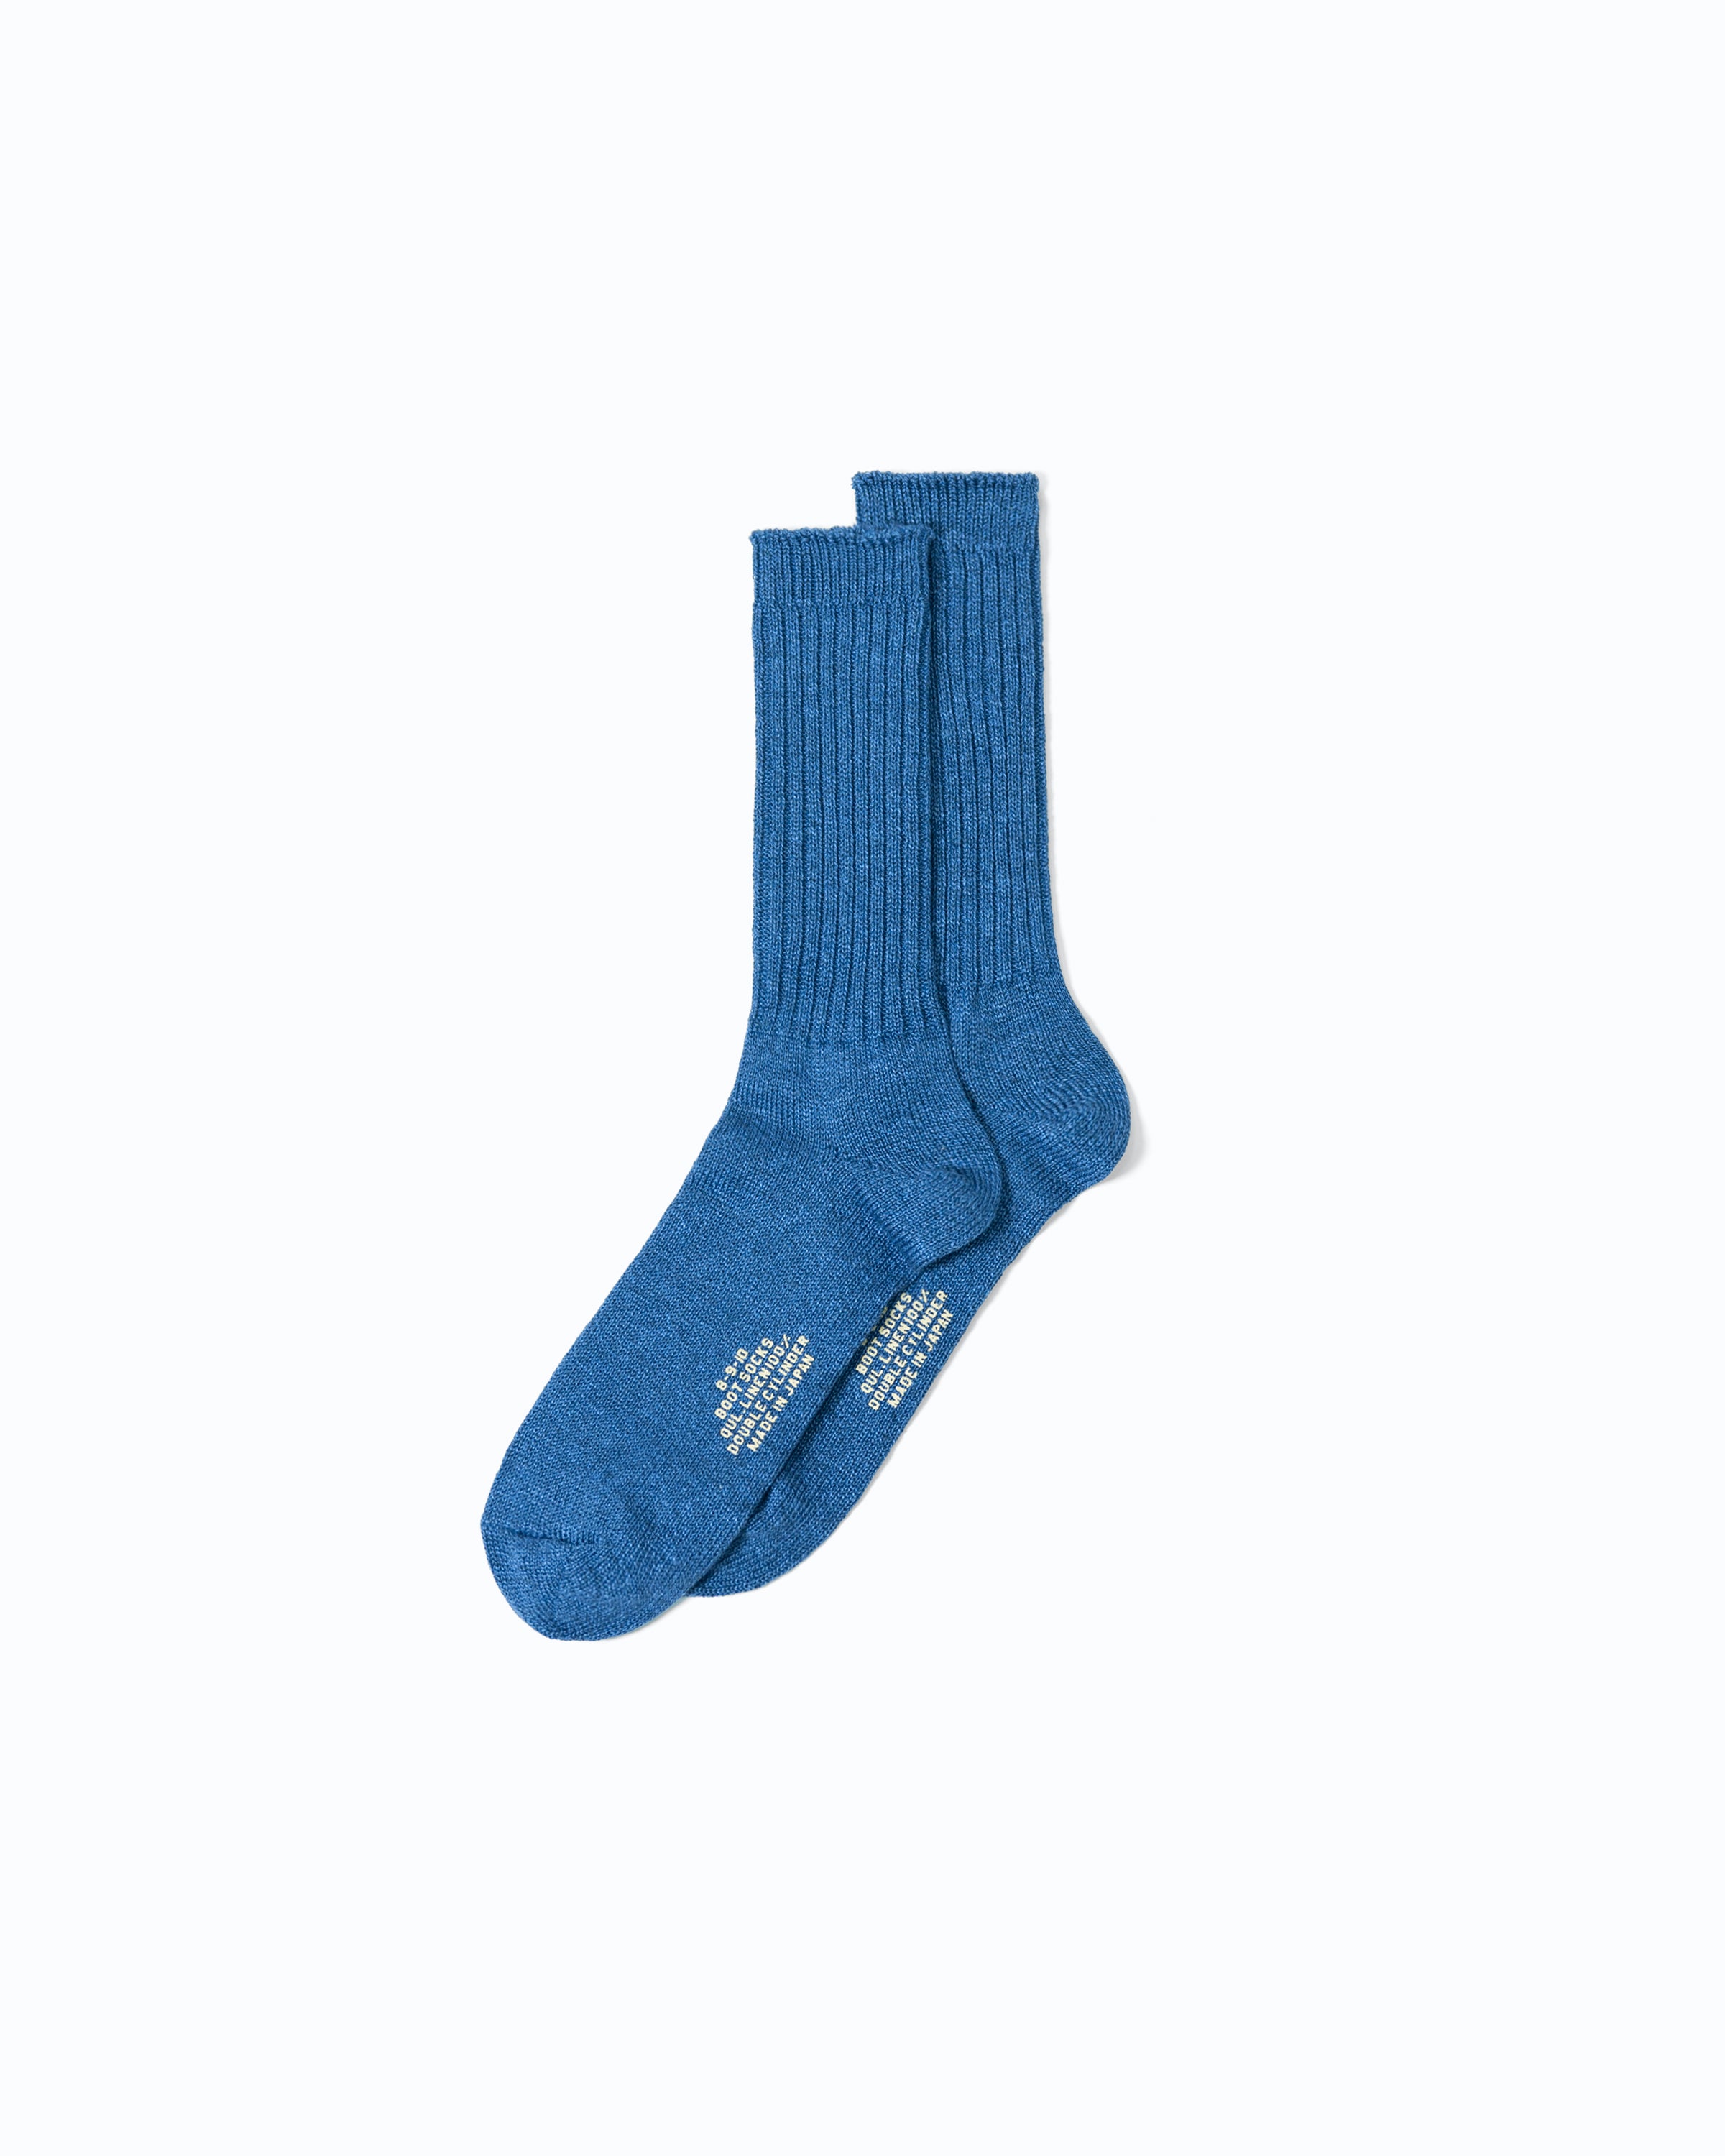 Linen Ribbed Socks 6110-3 | Heather Blue